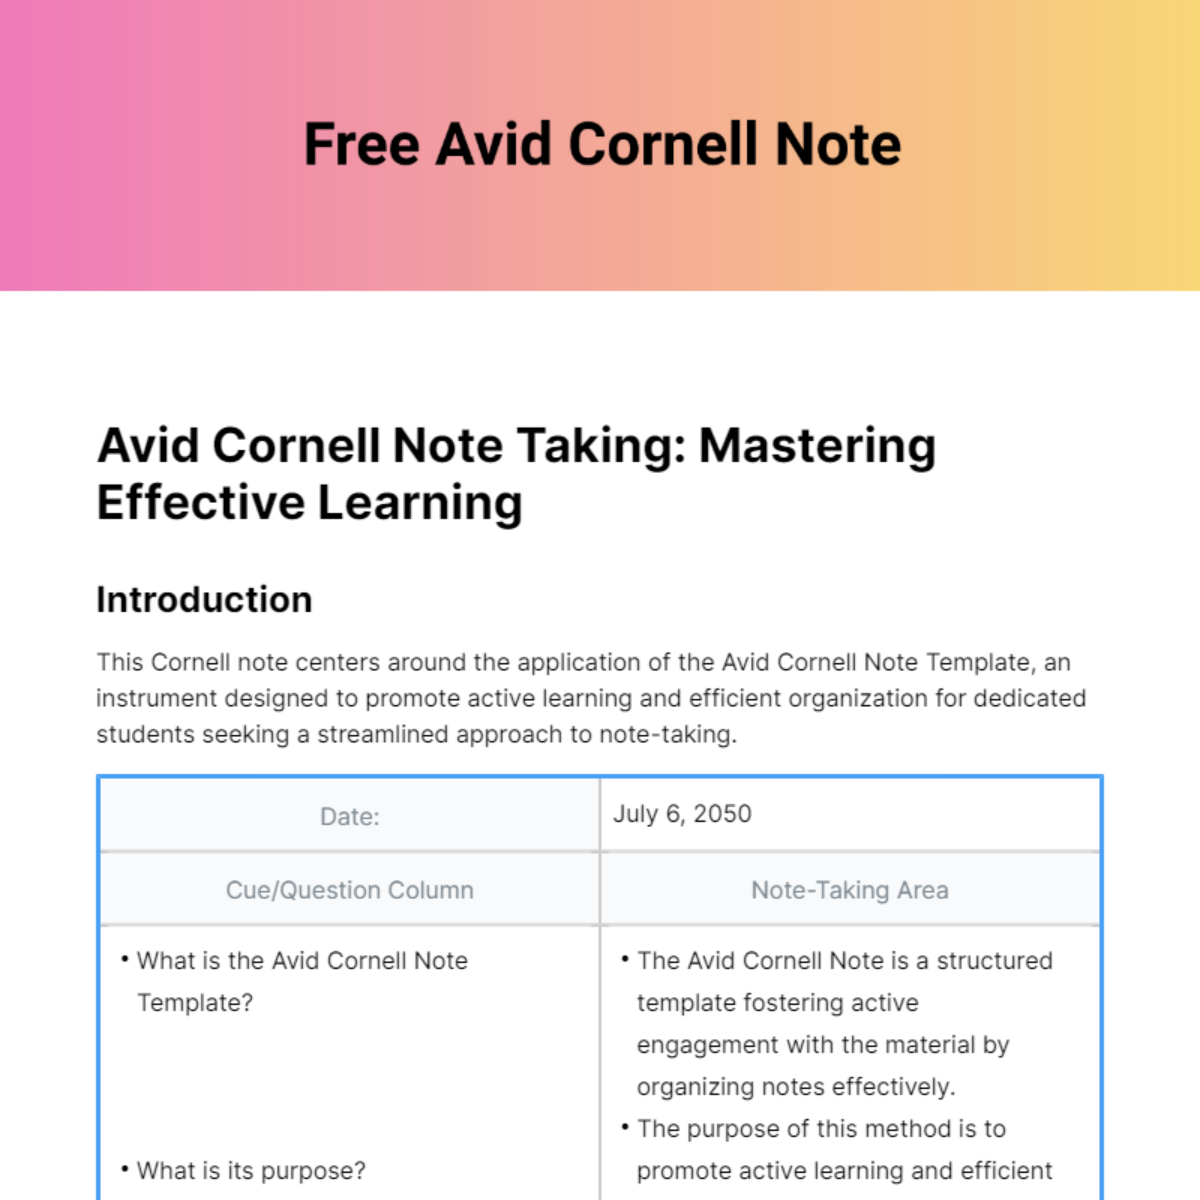 Free Avid Cornell Note Template